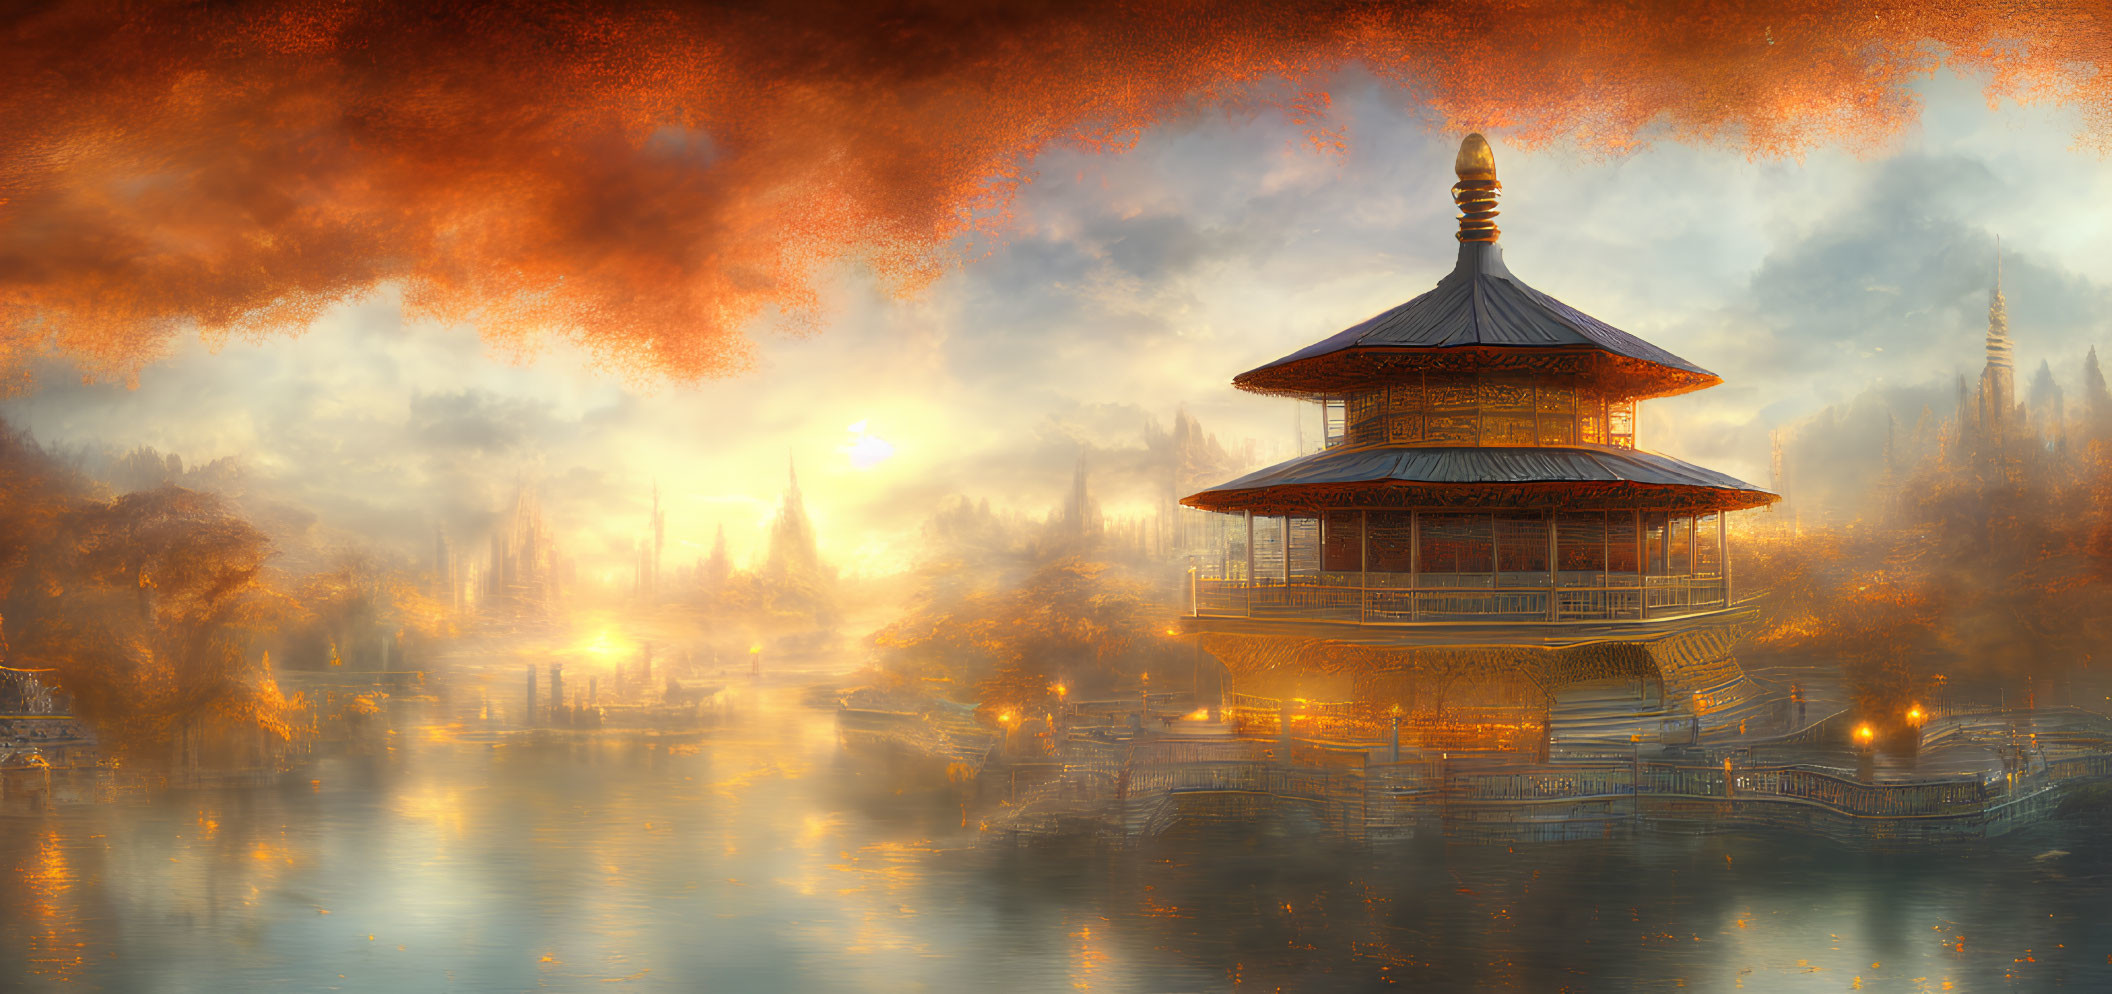 Asian-style pagoda near mist-covered lake in autumnal scene.